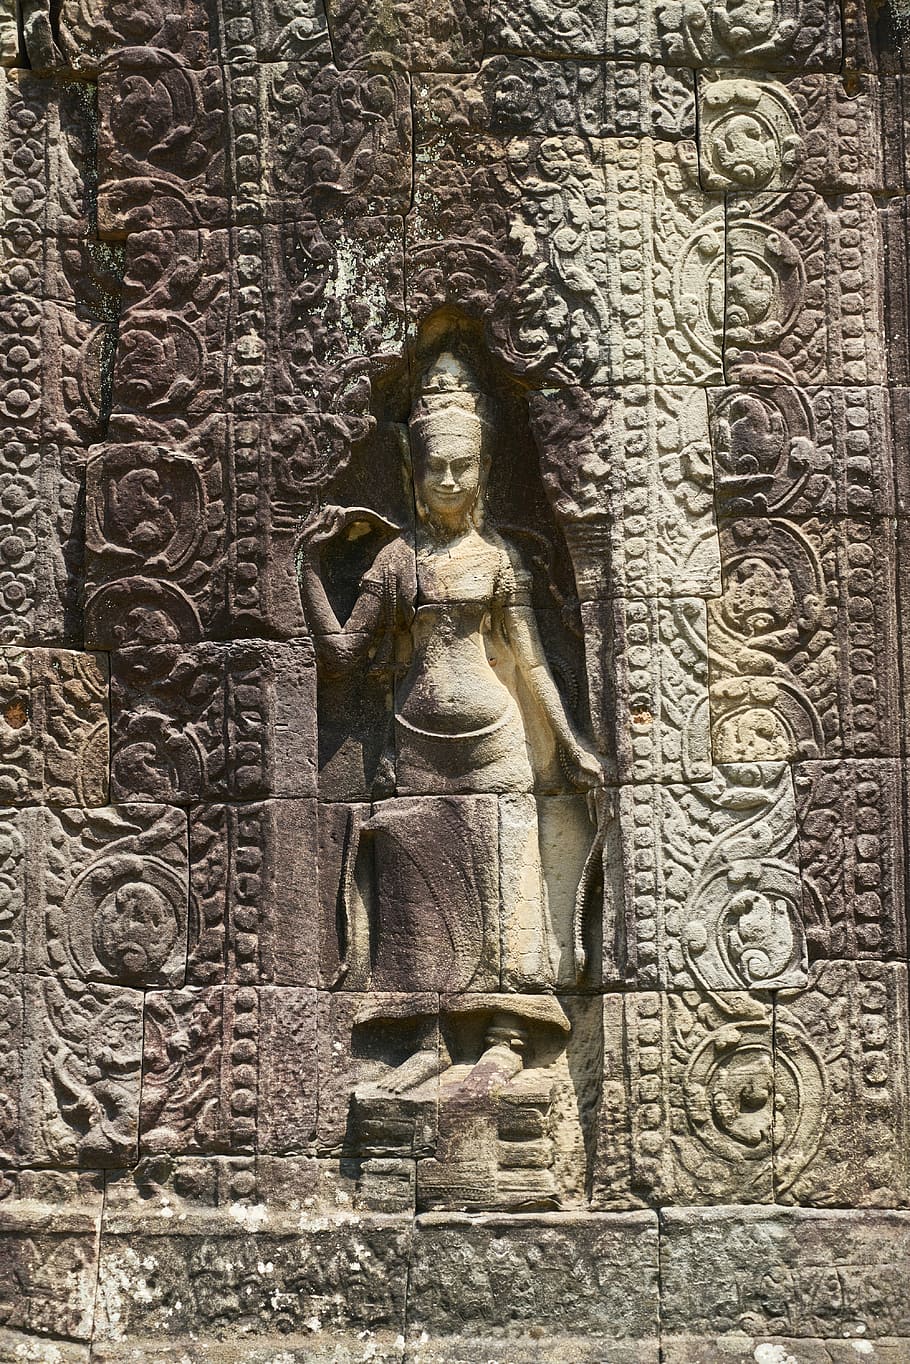 Sculpture, God, Buddhism, Buddhist, asian, cambodia, faith, worship, travel, temple